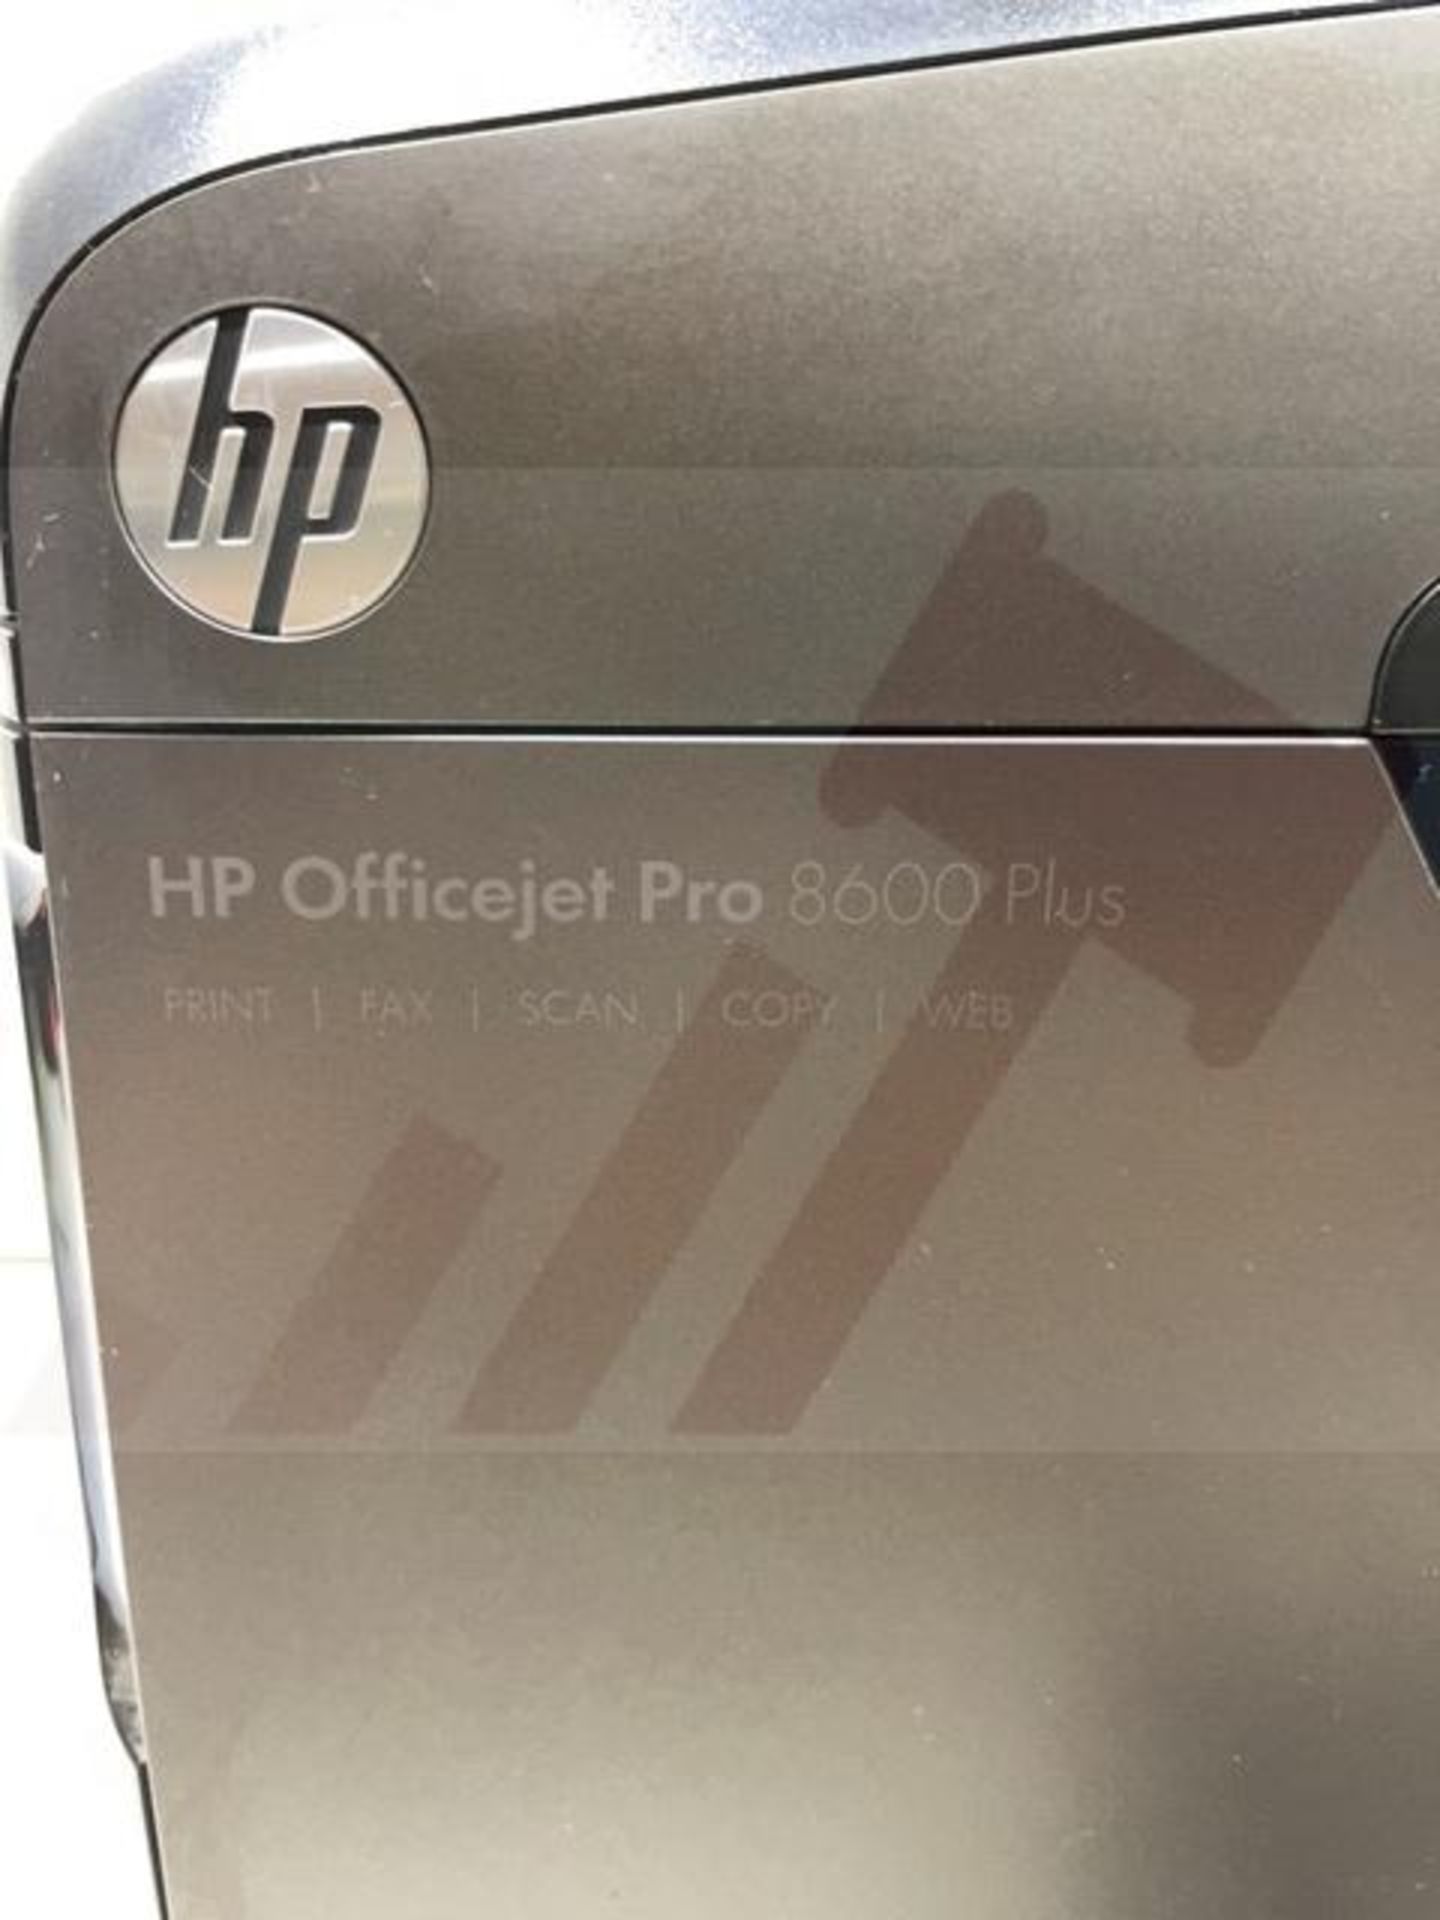 HP Printer | Office Jet Pro 8600 Plus - Image 2 of 8